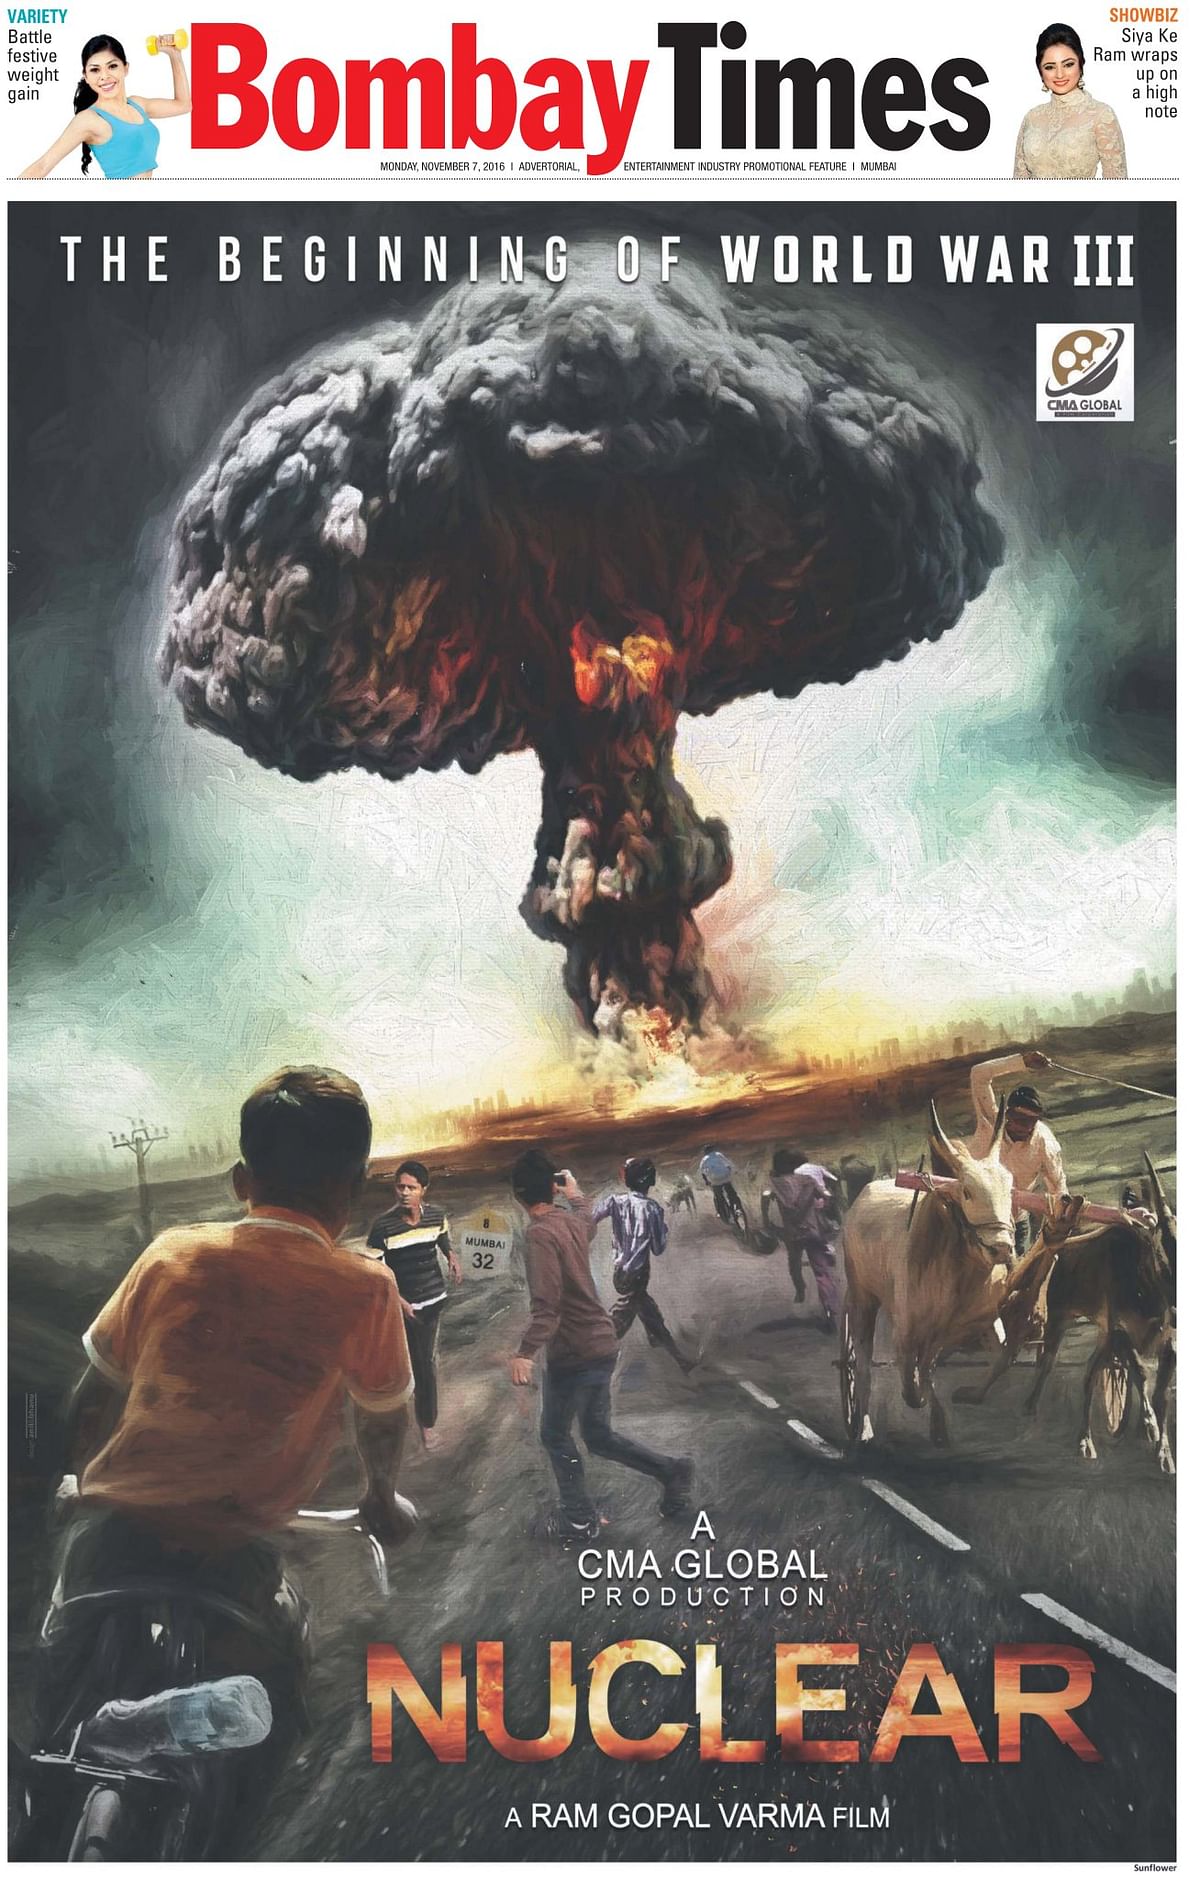 Why Ram Gopal Varma’s mega budget film ‘Nuclear’ sounds incredulous.